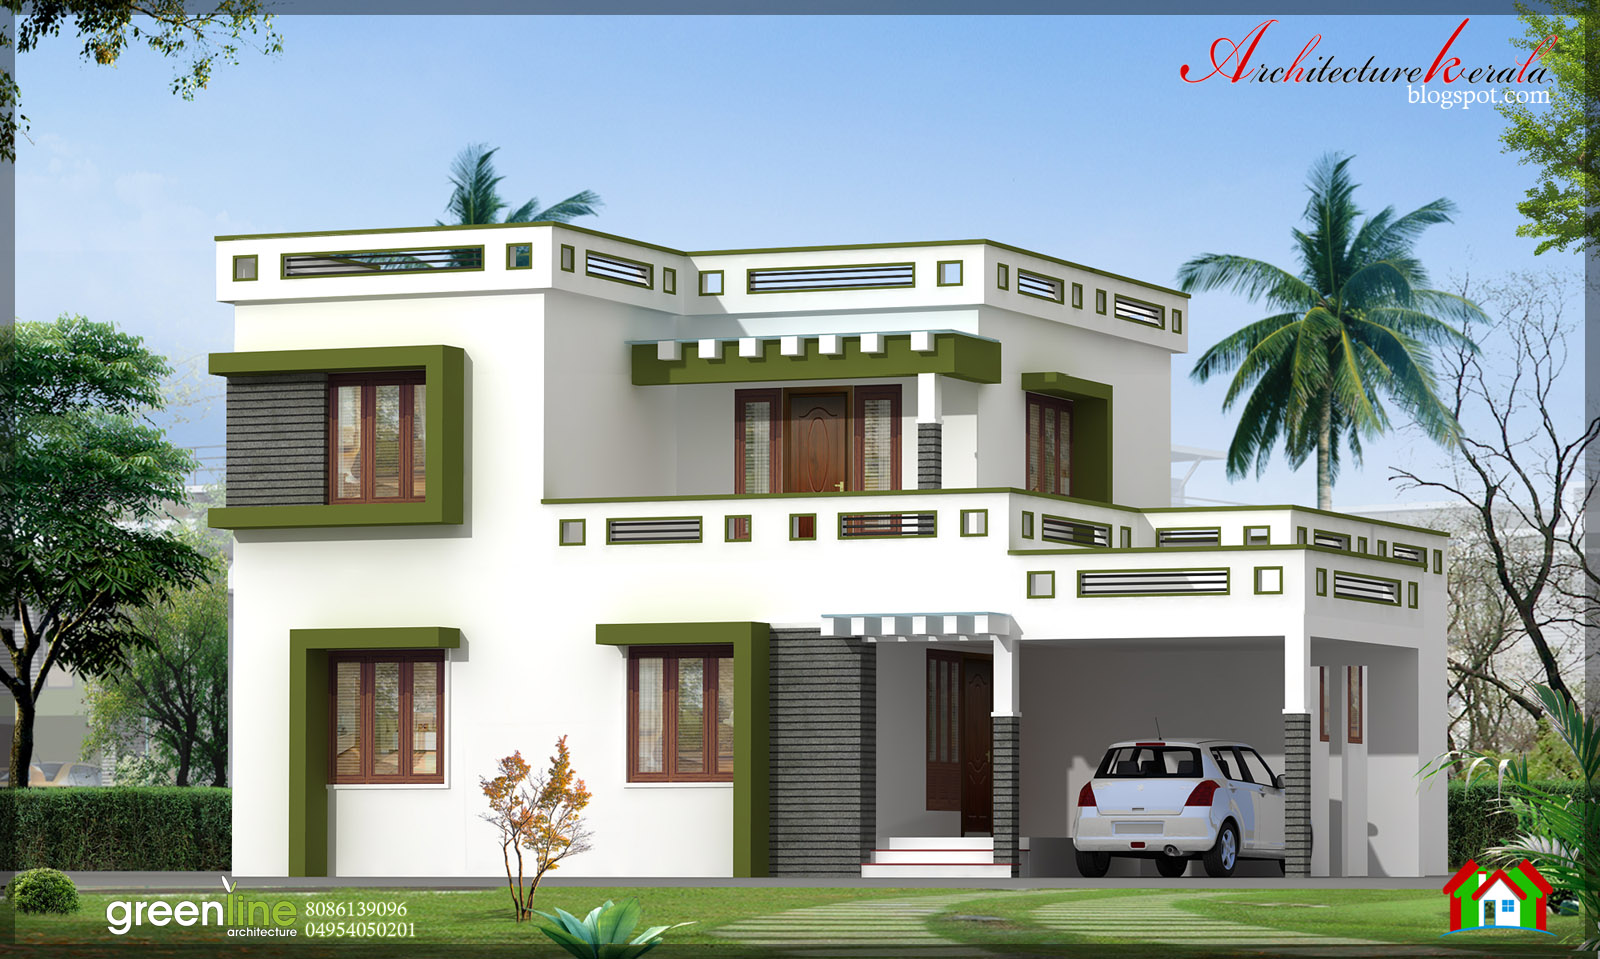 Architecture Kerala  3 BHK NEW  MODERN  STYLE  KERALA  HOME  